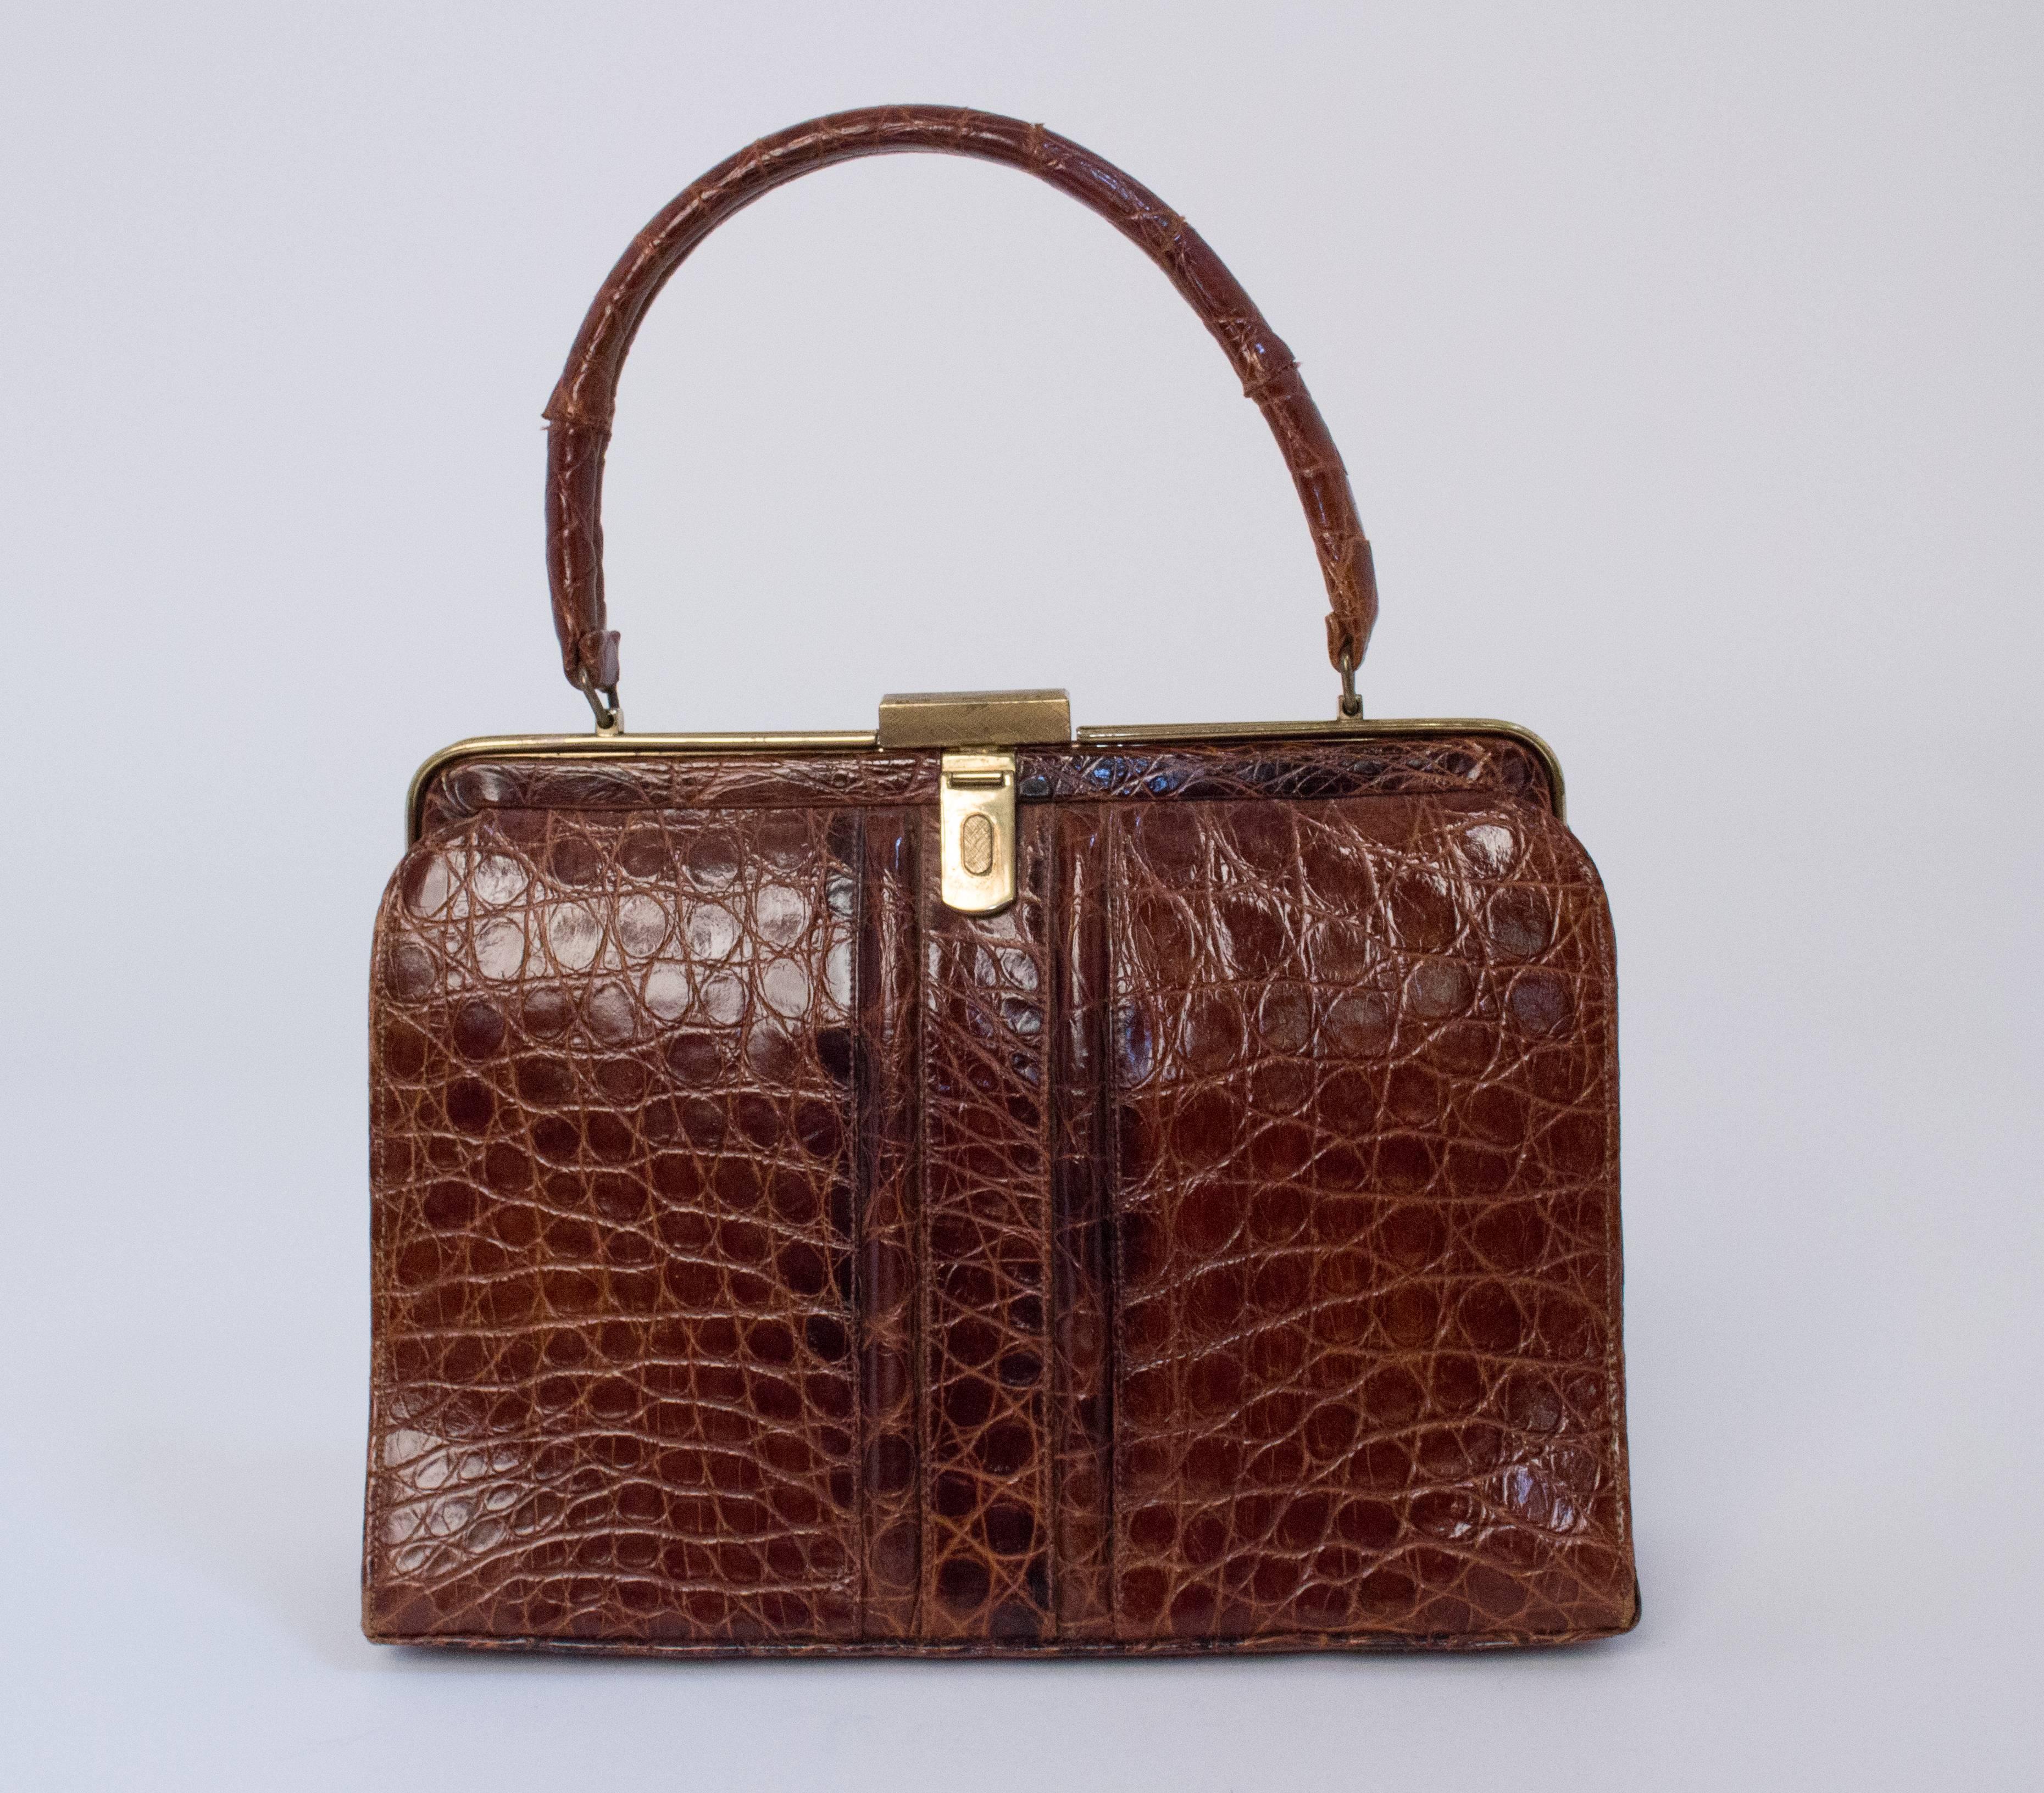 60s sienna brown alligator handbag. Gold tone hardware. Light tan leather interior. 3 interior pockets. I interior zip pocket. 

Measurements:
Body of bag: 9 3/4 x 7 1/4 inches 
Handle: 12 3/4 inches 